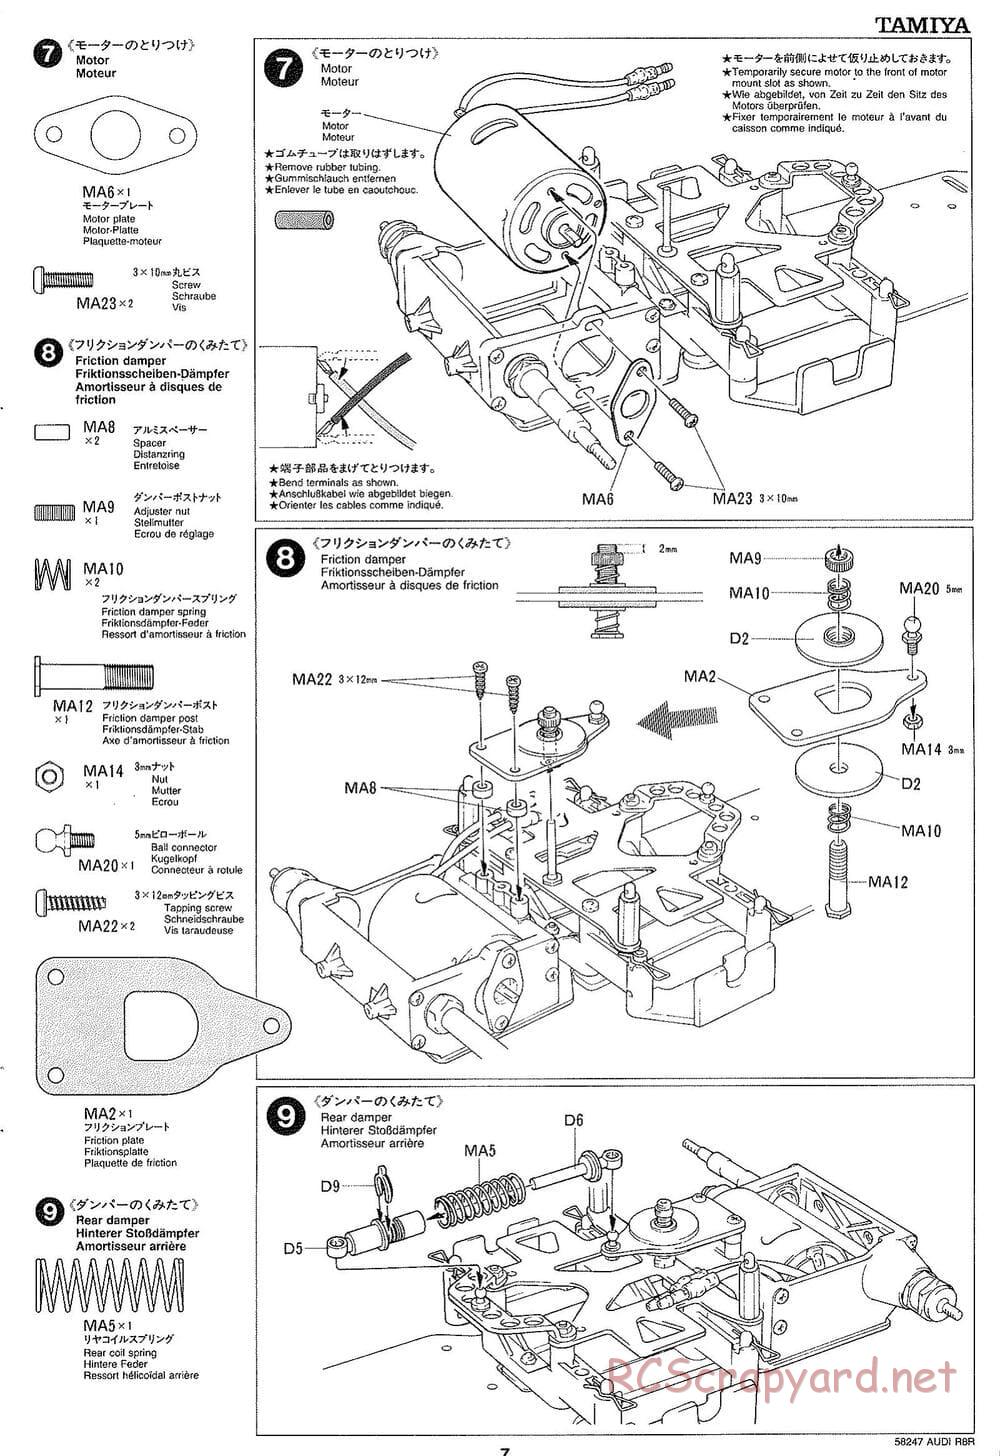 Tamiya - Audi R8R - F103LM Chassis - Manual - Page 7